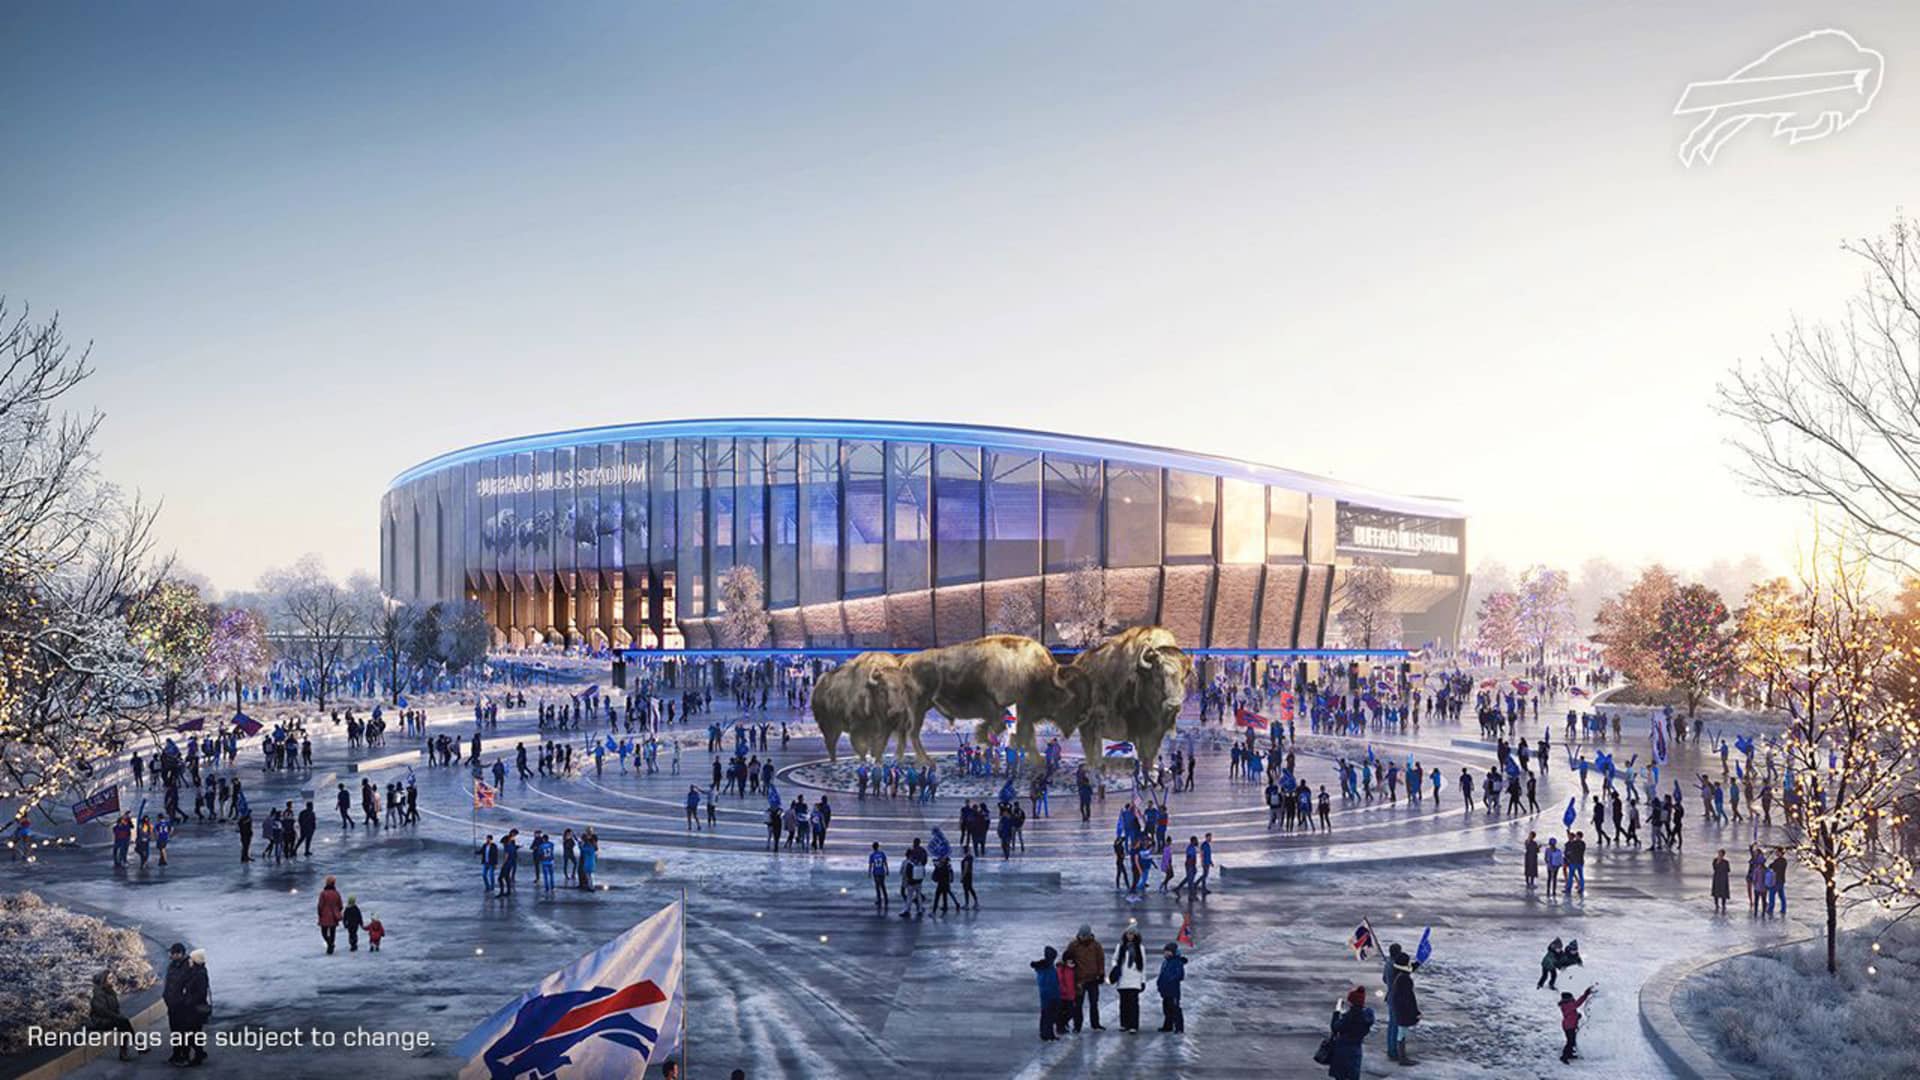 Buffalo Bills unveil first design images of their new $1.4 billion stadium